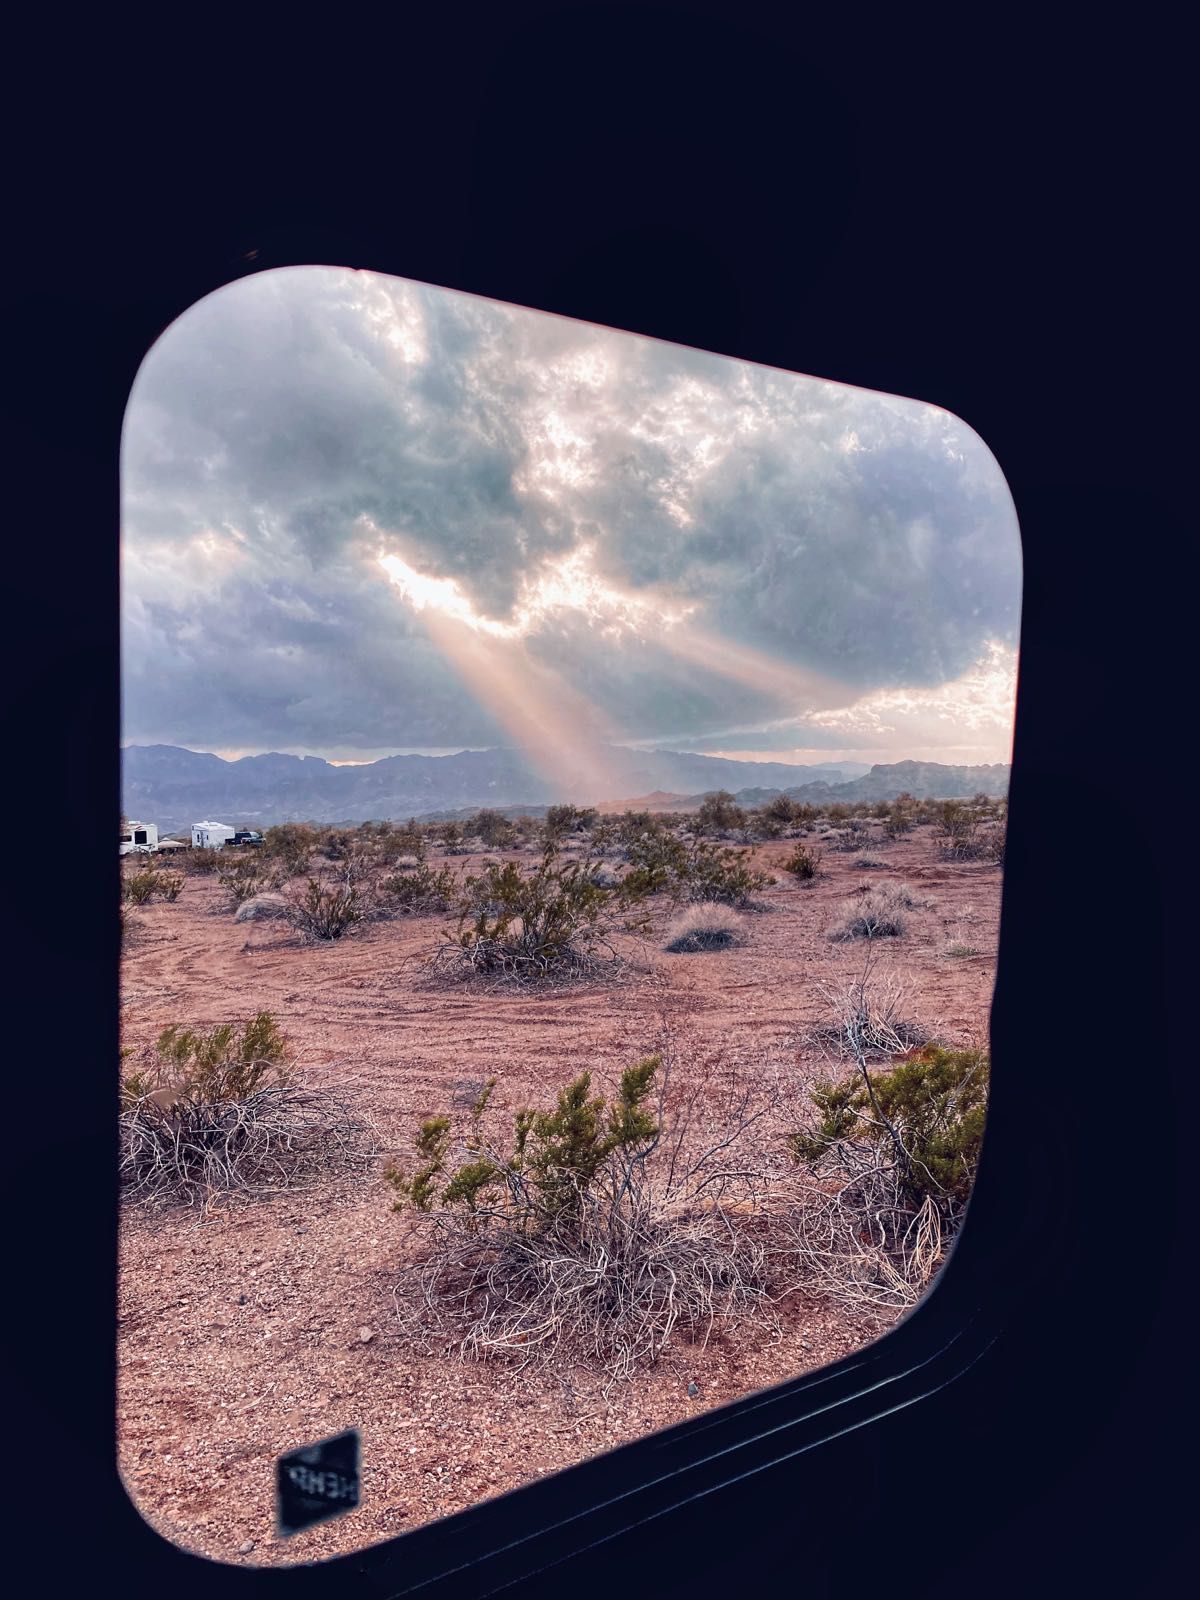 Afternoon view out of porthole on camper door near Lake Havasu City Arizona